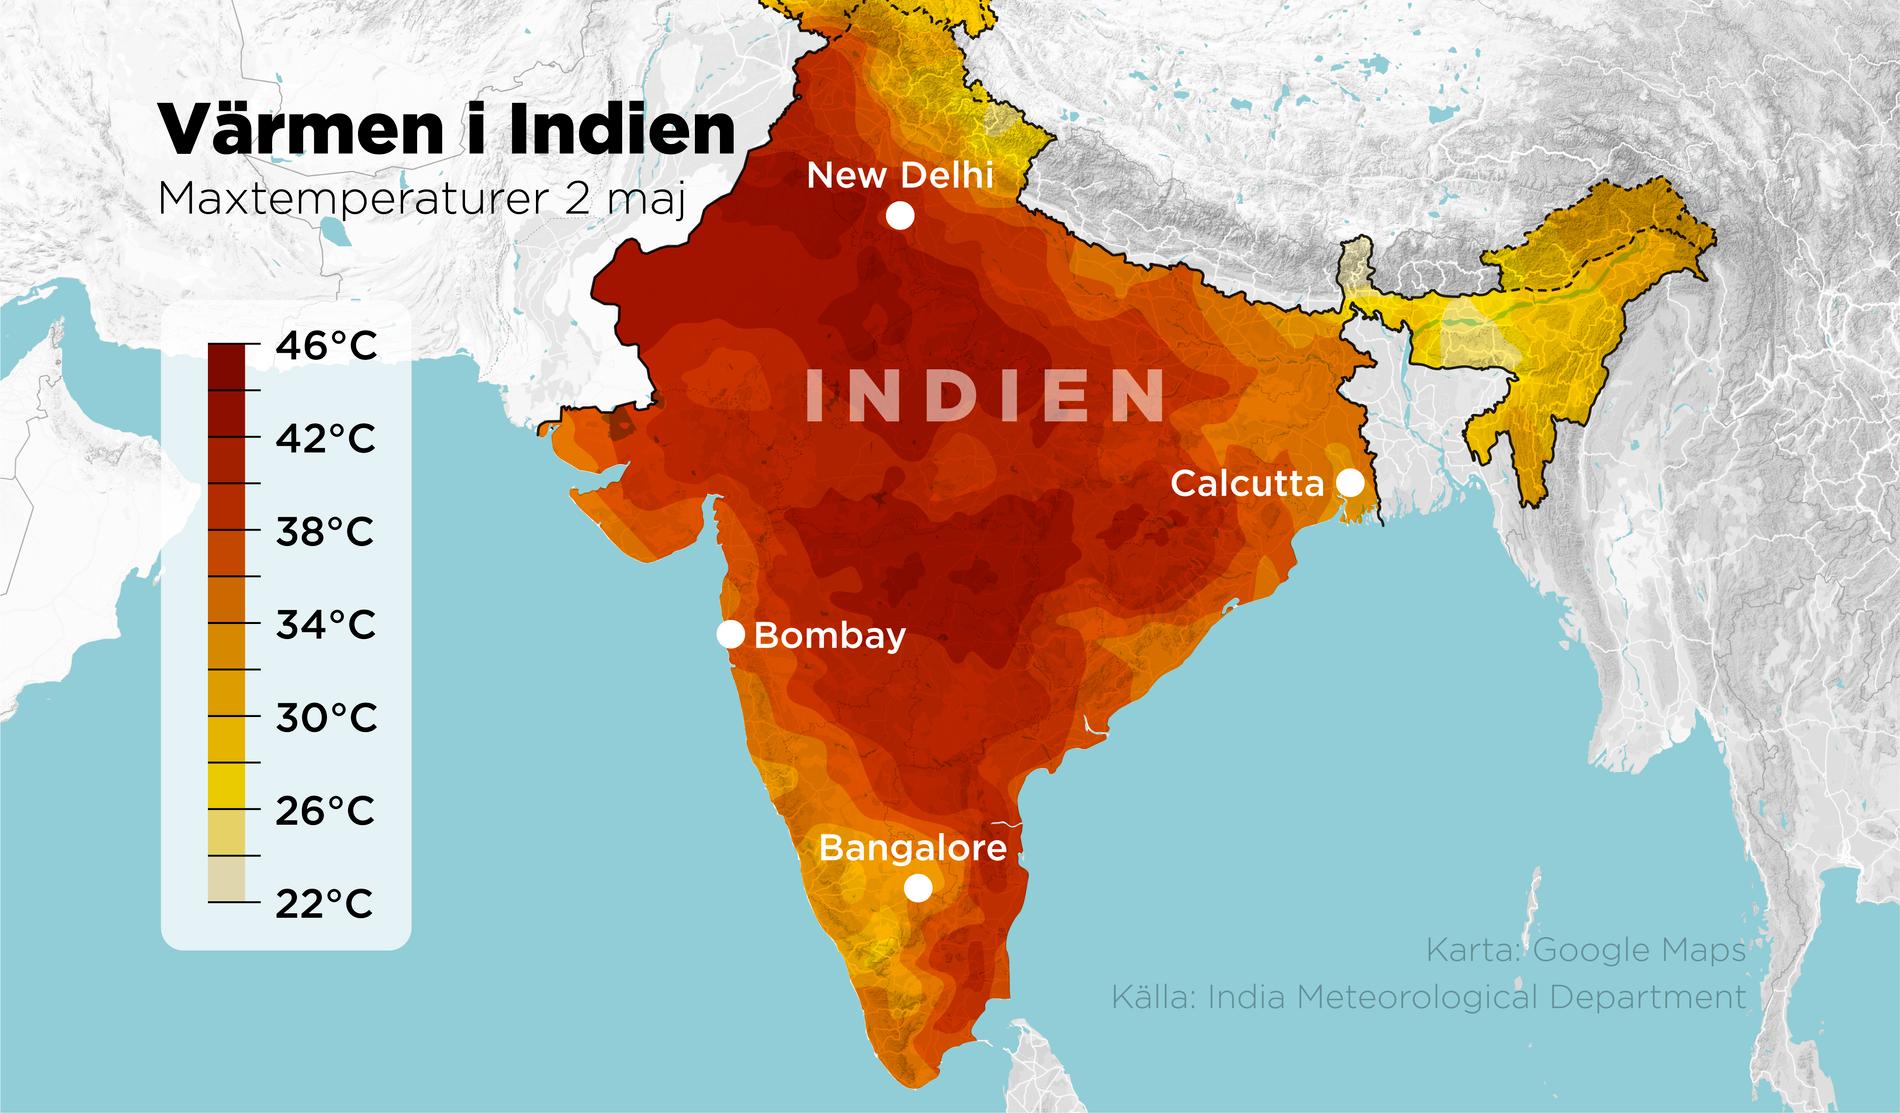 Maxtemperaturer i Indien den 2 maj.